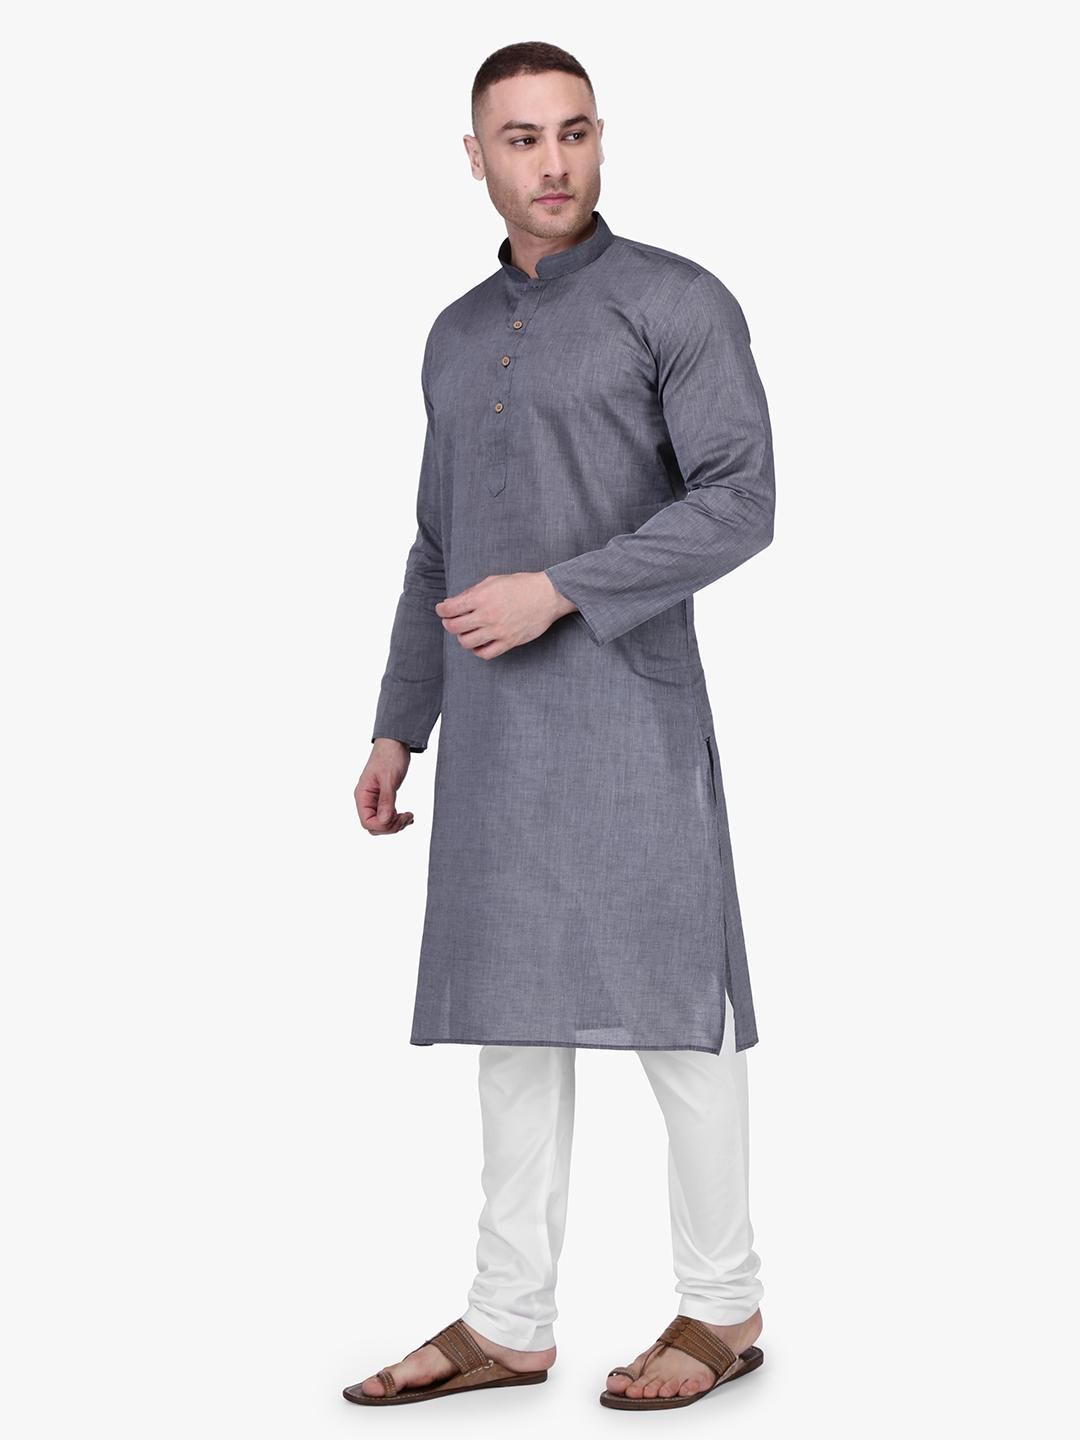 Iron Grey Slim Fit Handloom Cotton Kurta for Men Online Color Grey ...